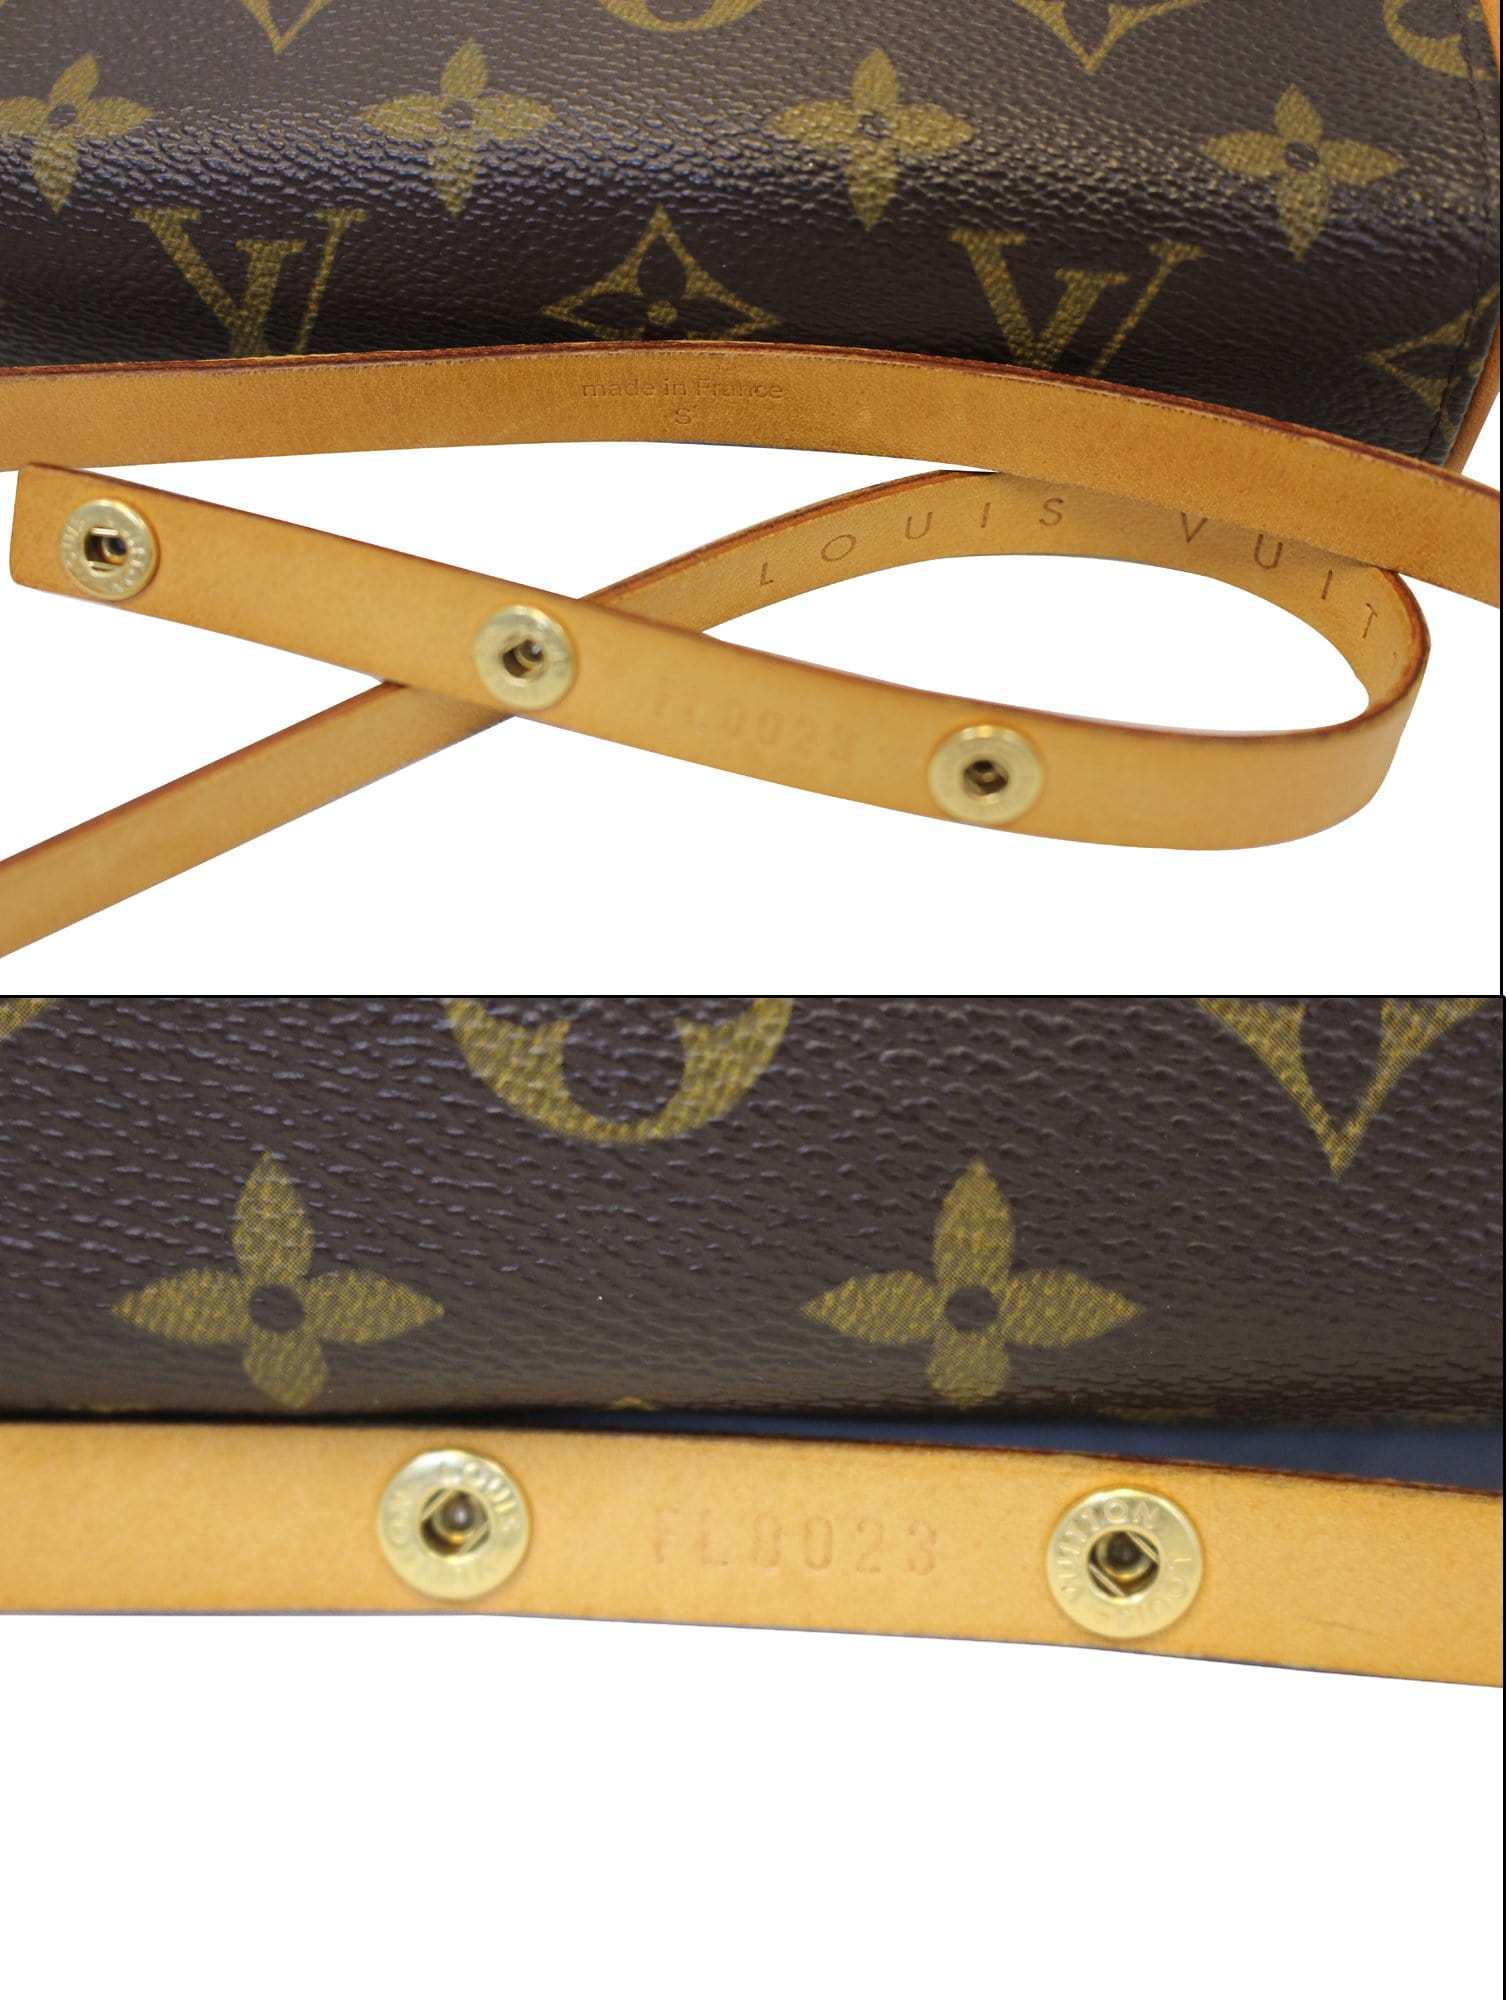 Louis Vuitton 2003 Pre-owned Pochette Florentine Belt Bag - Brown